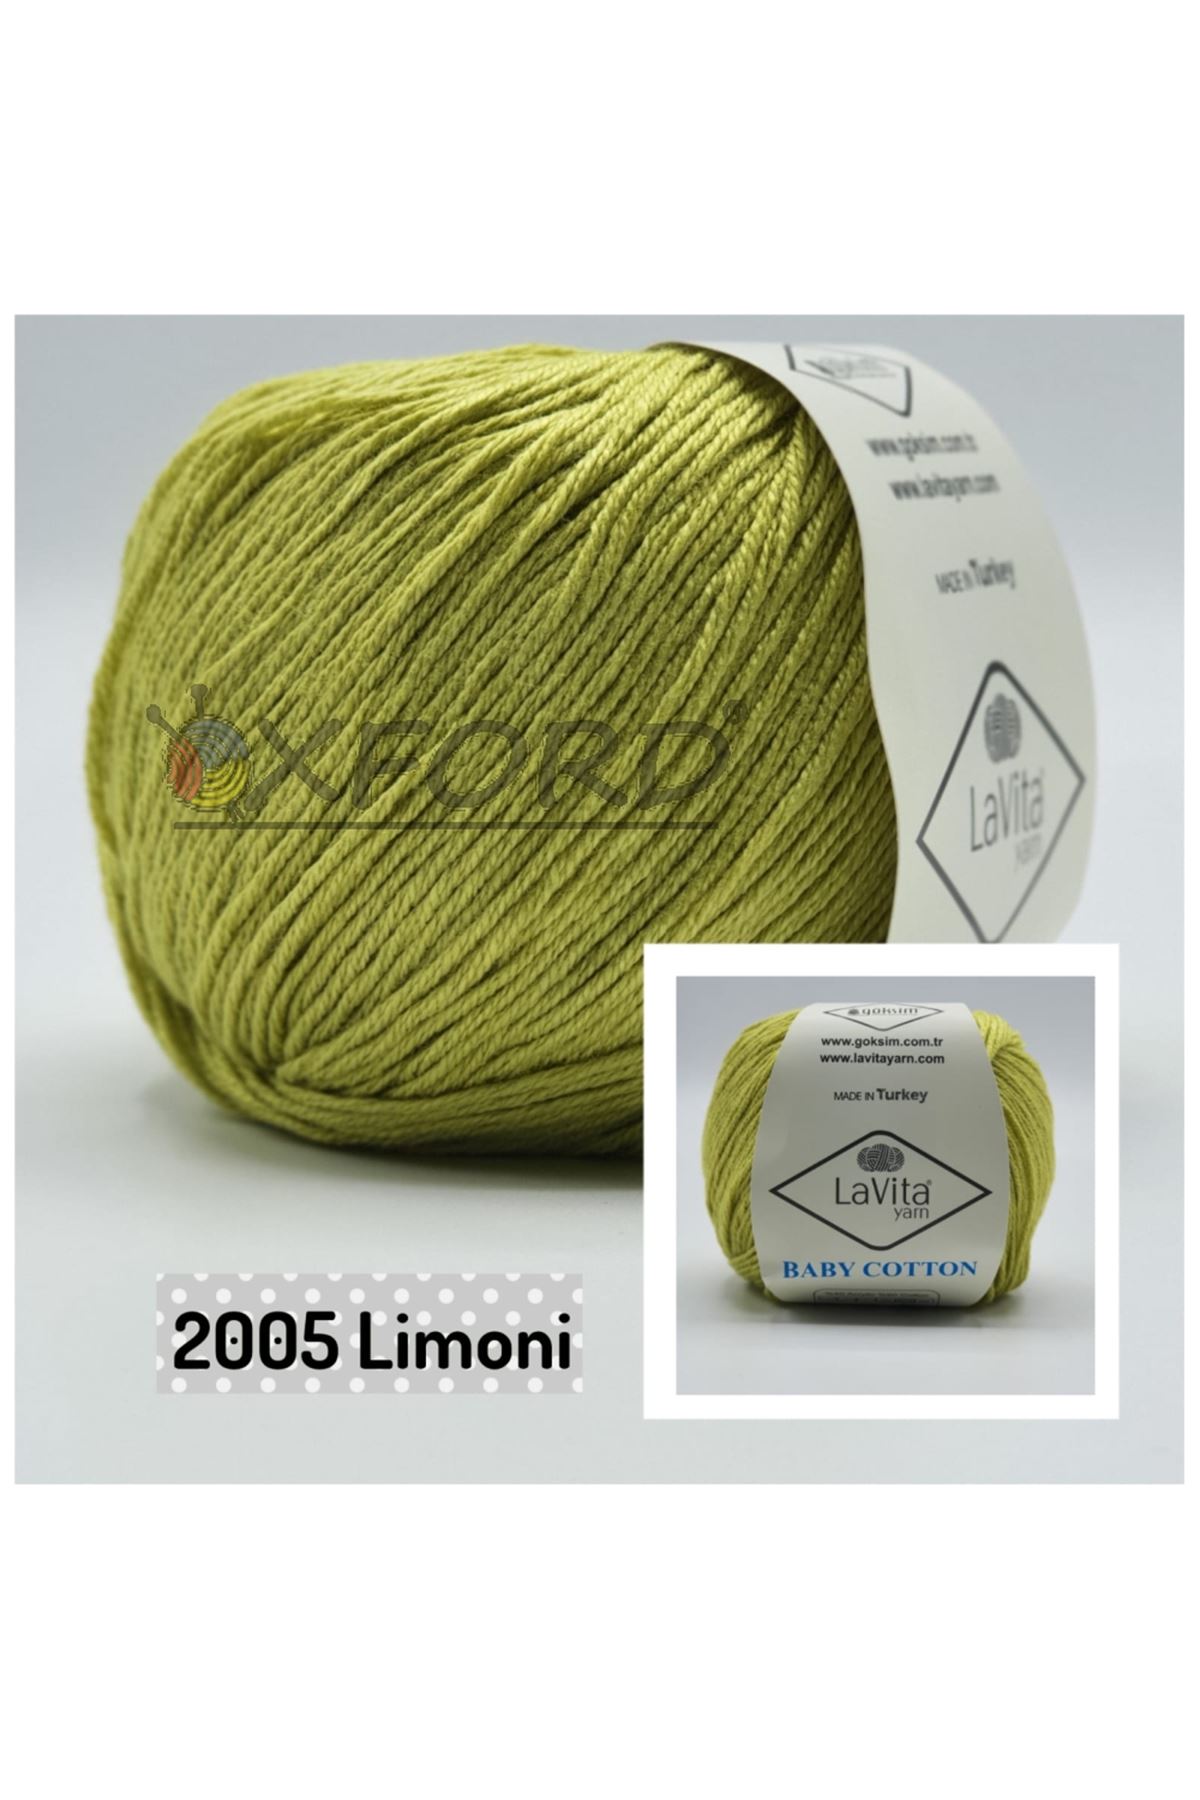 Lavita Baby Cotton 2005 Limoni